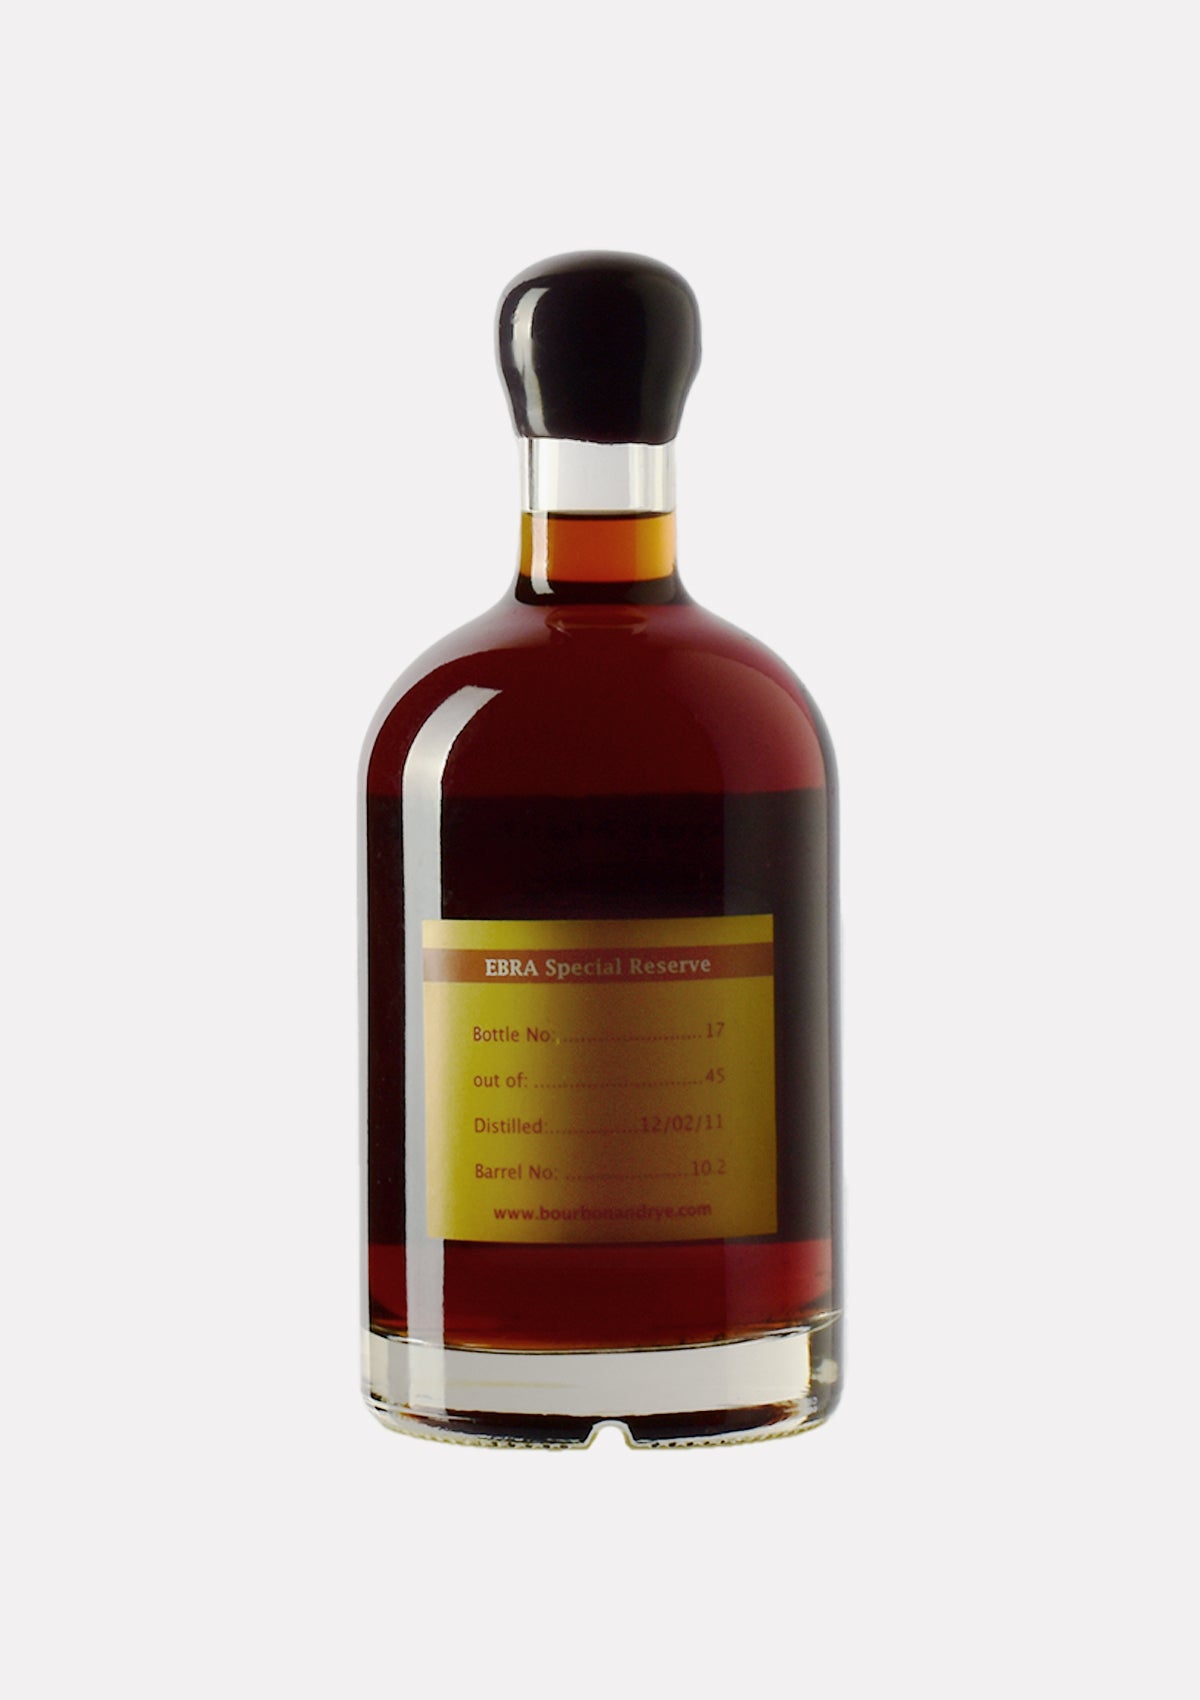 EBRA Tennessee Sour Mash Whiskey 10.2